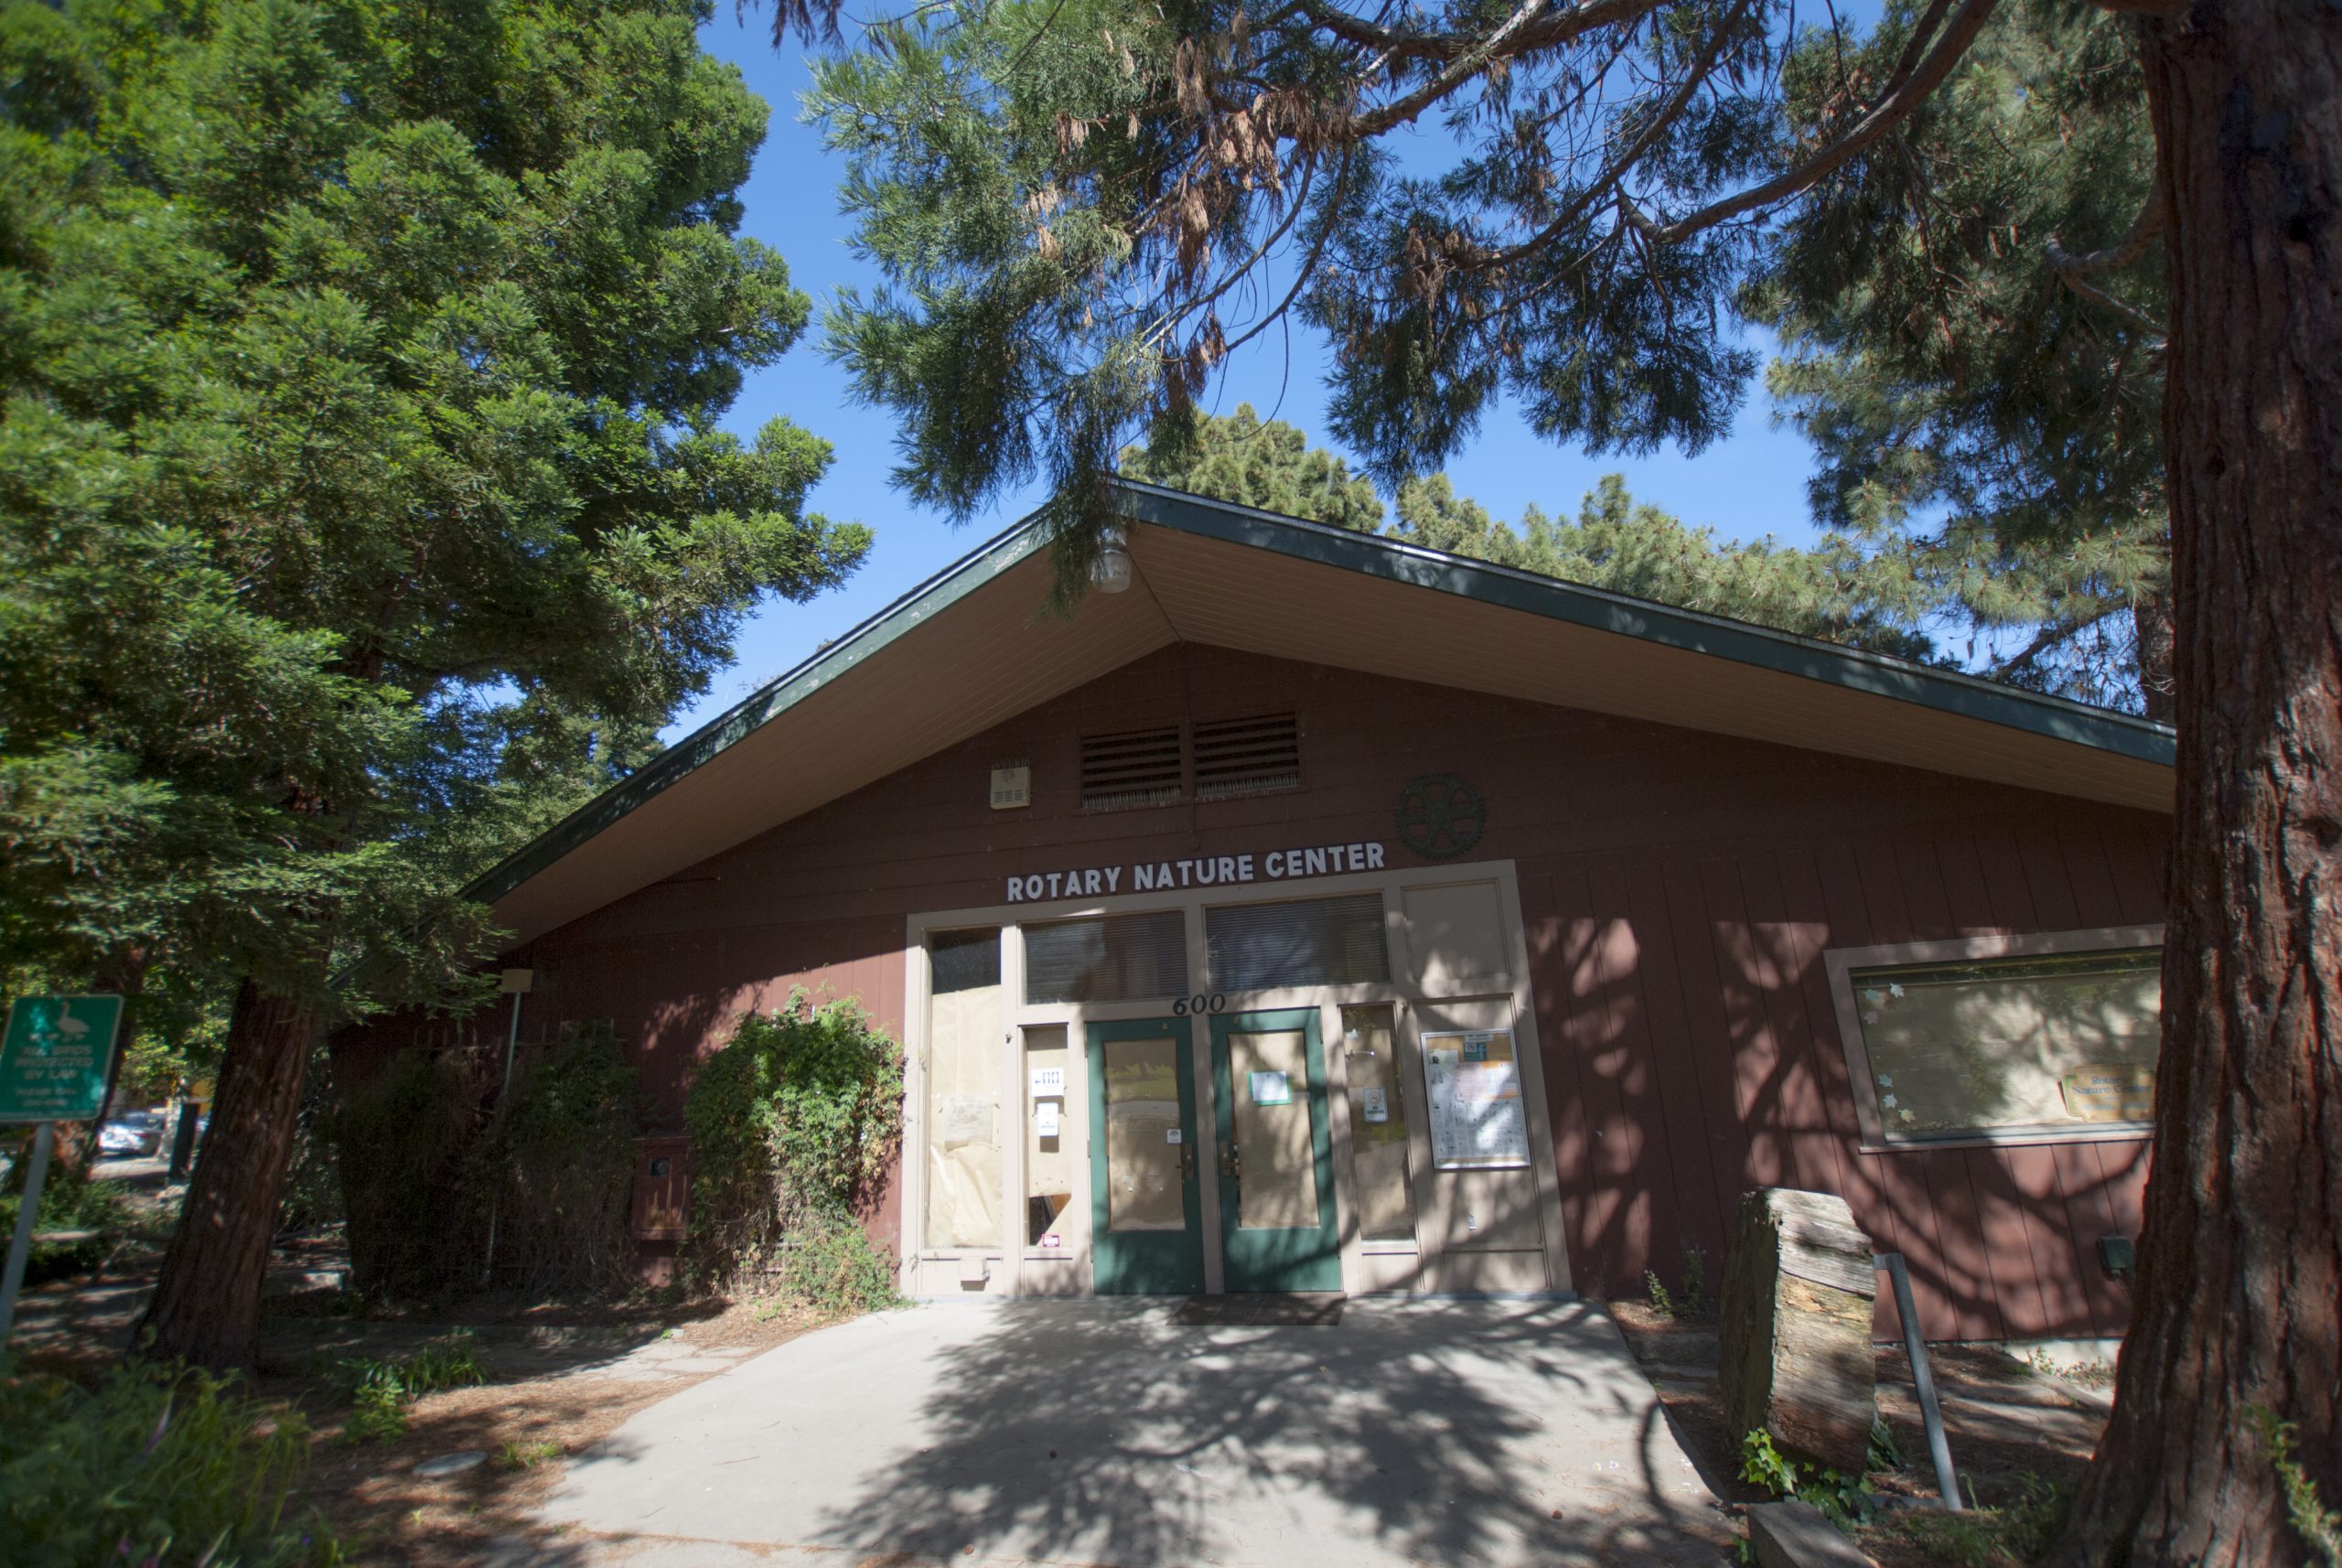 The Rotary Nature Center near Lake Merritt in Oakland. Photo by Scott Morris.